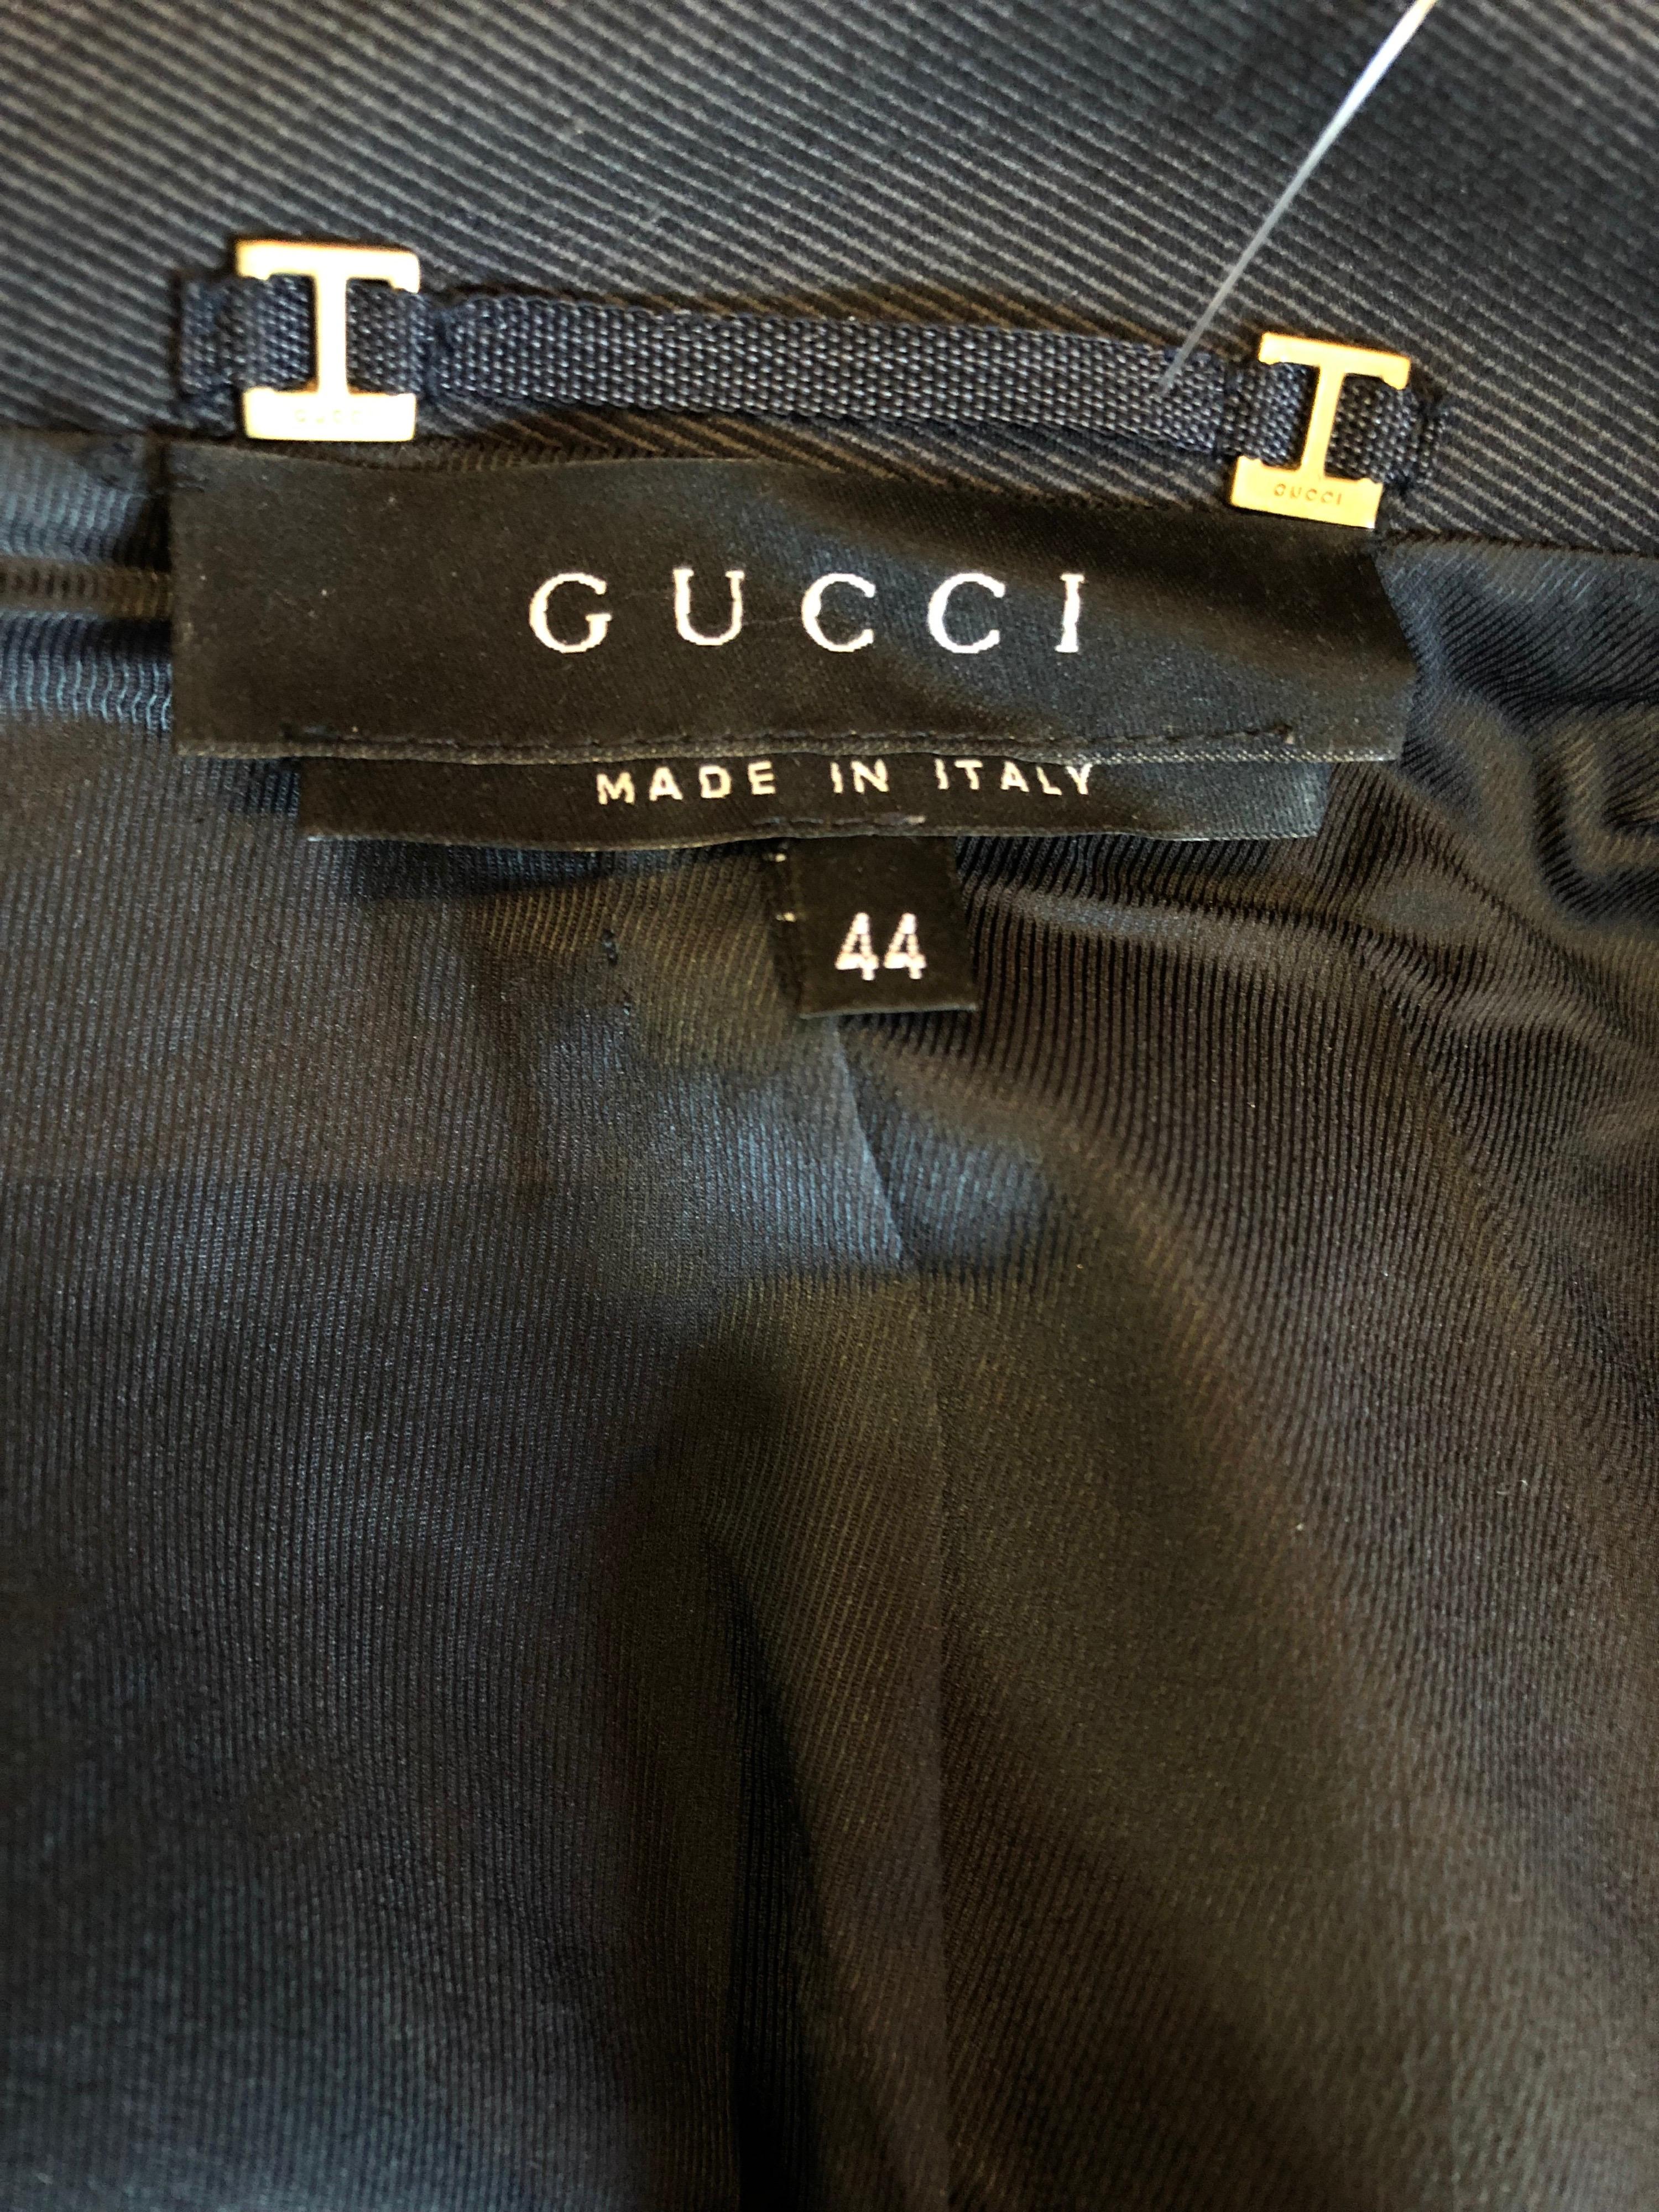 Gucci, 2003 Tom Ford Jacket  5